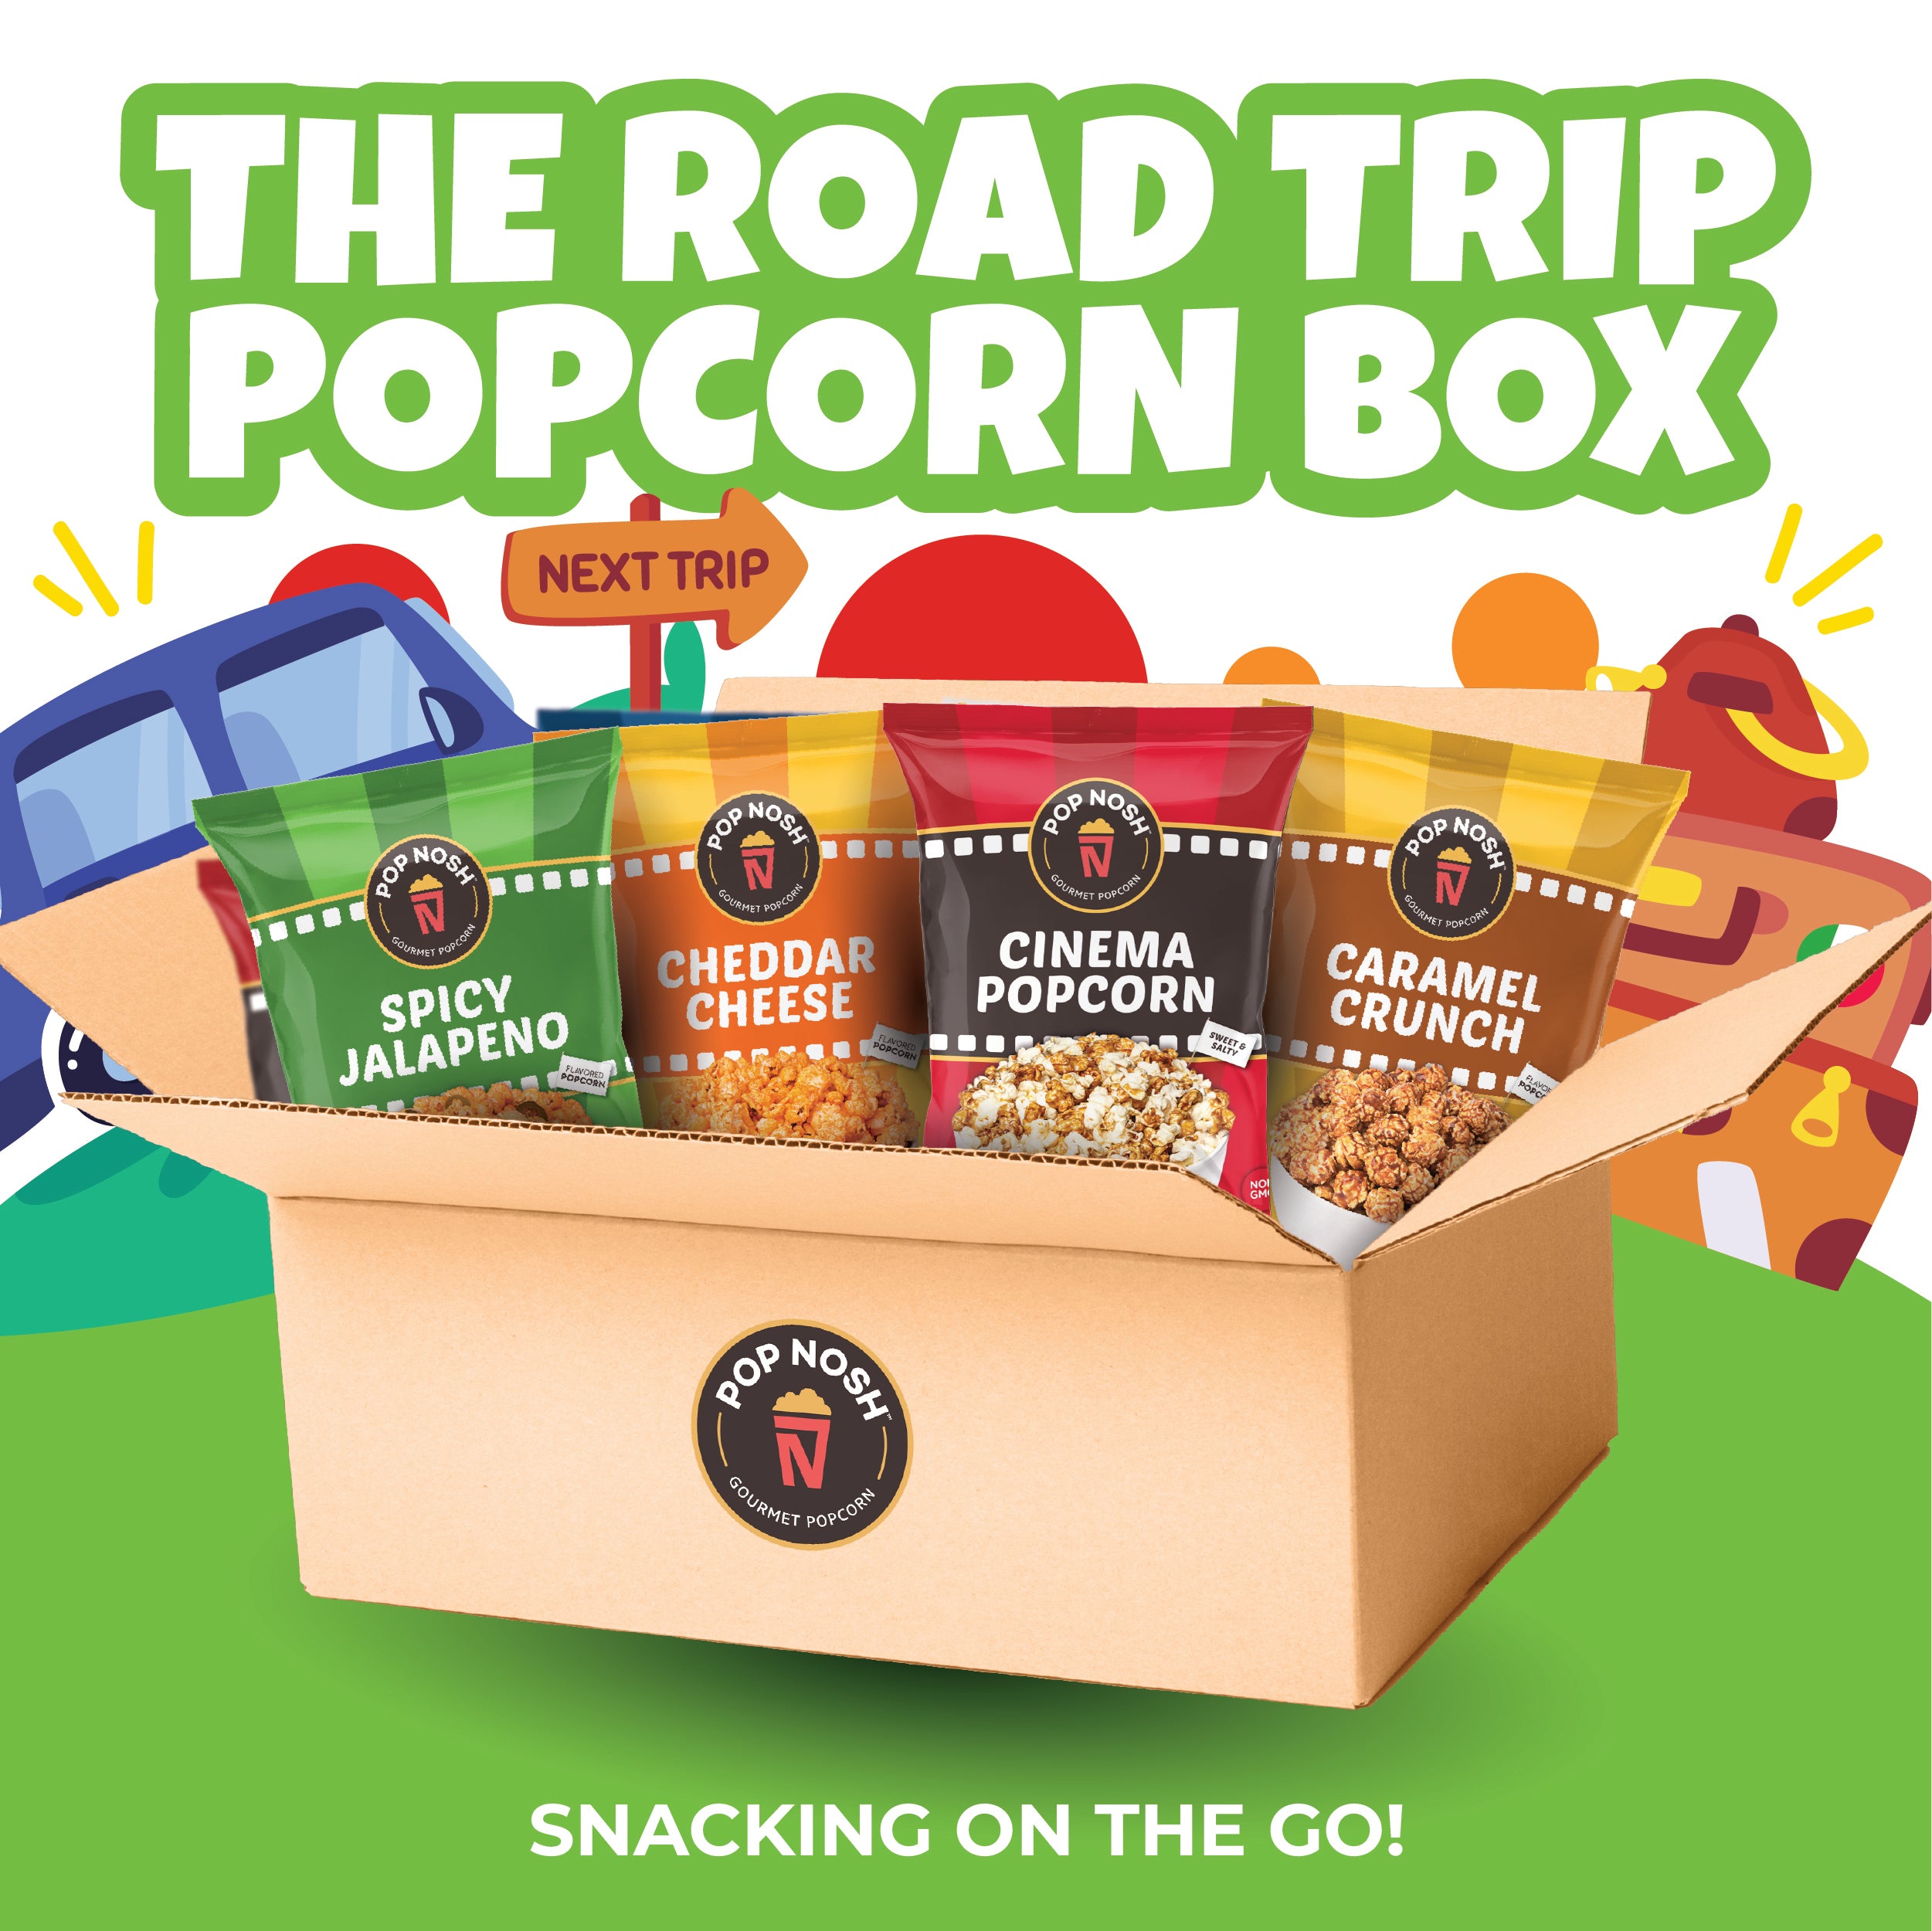 The Road Trip Popcorn Box